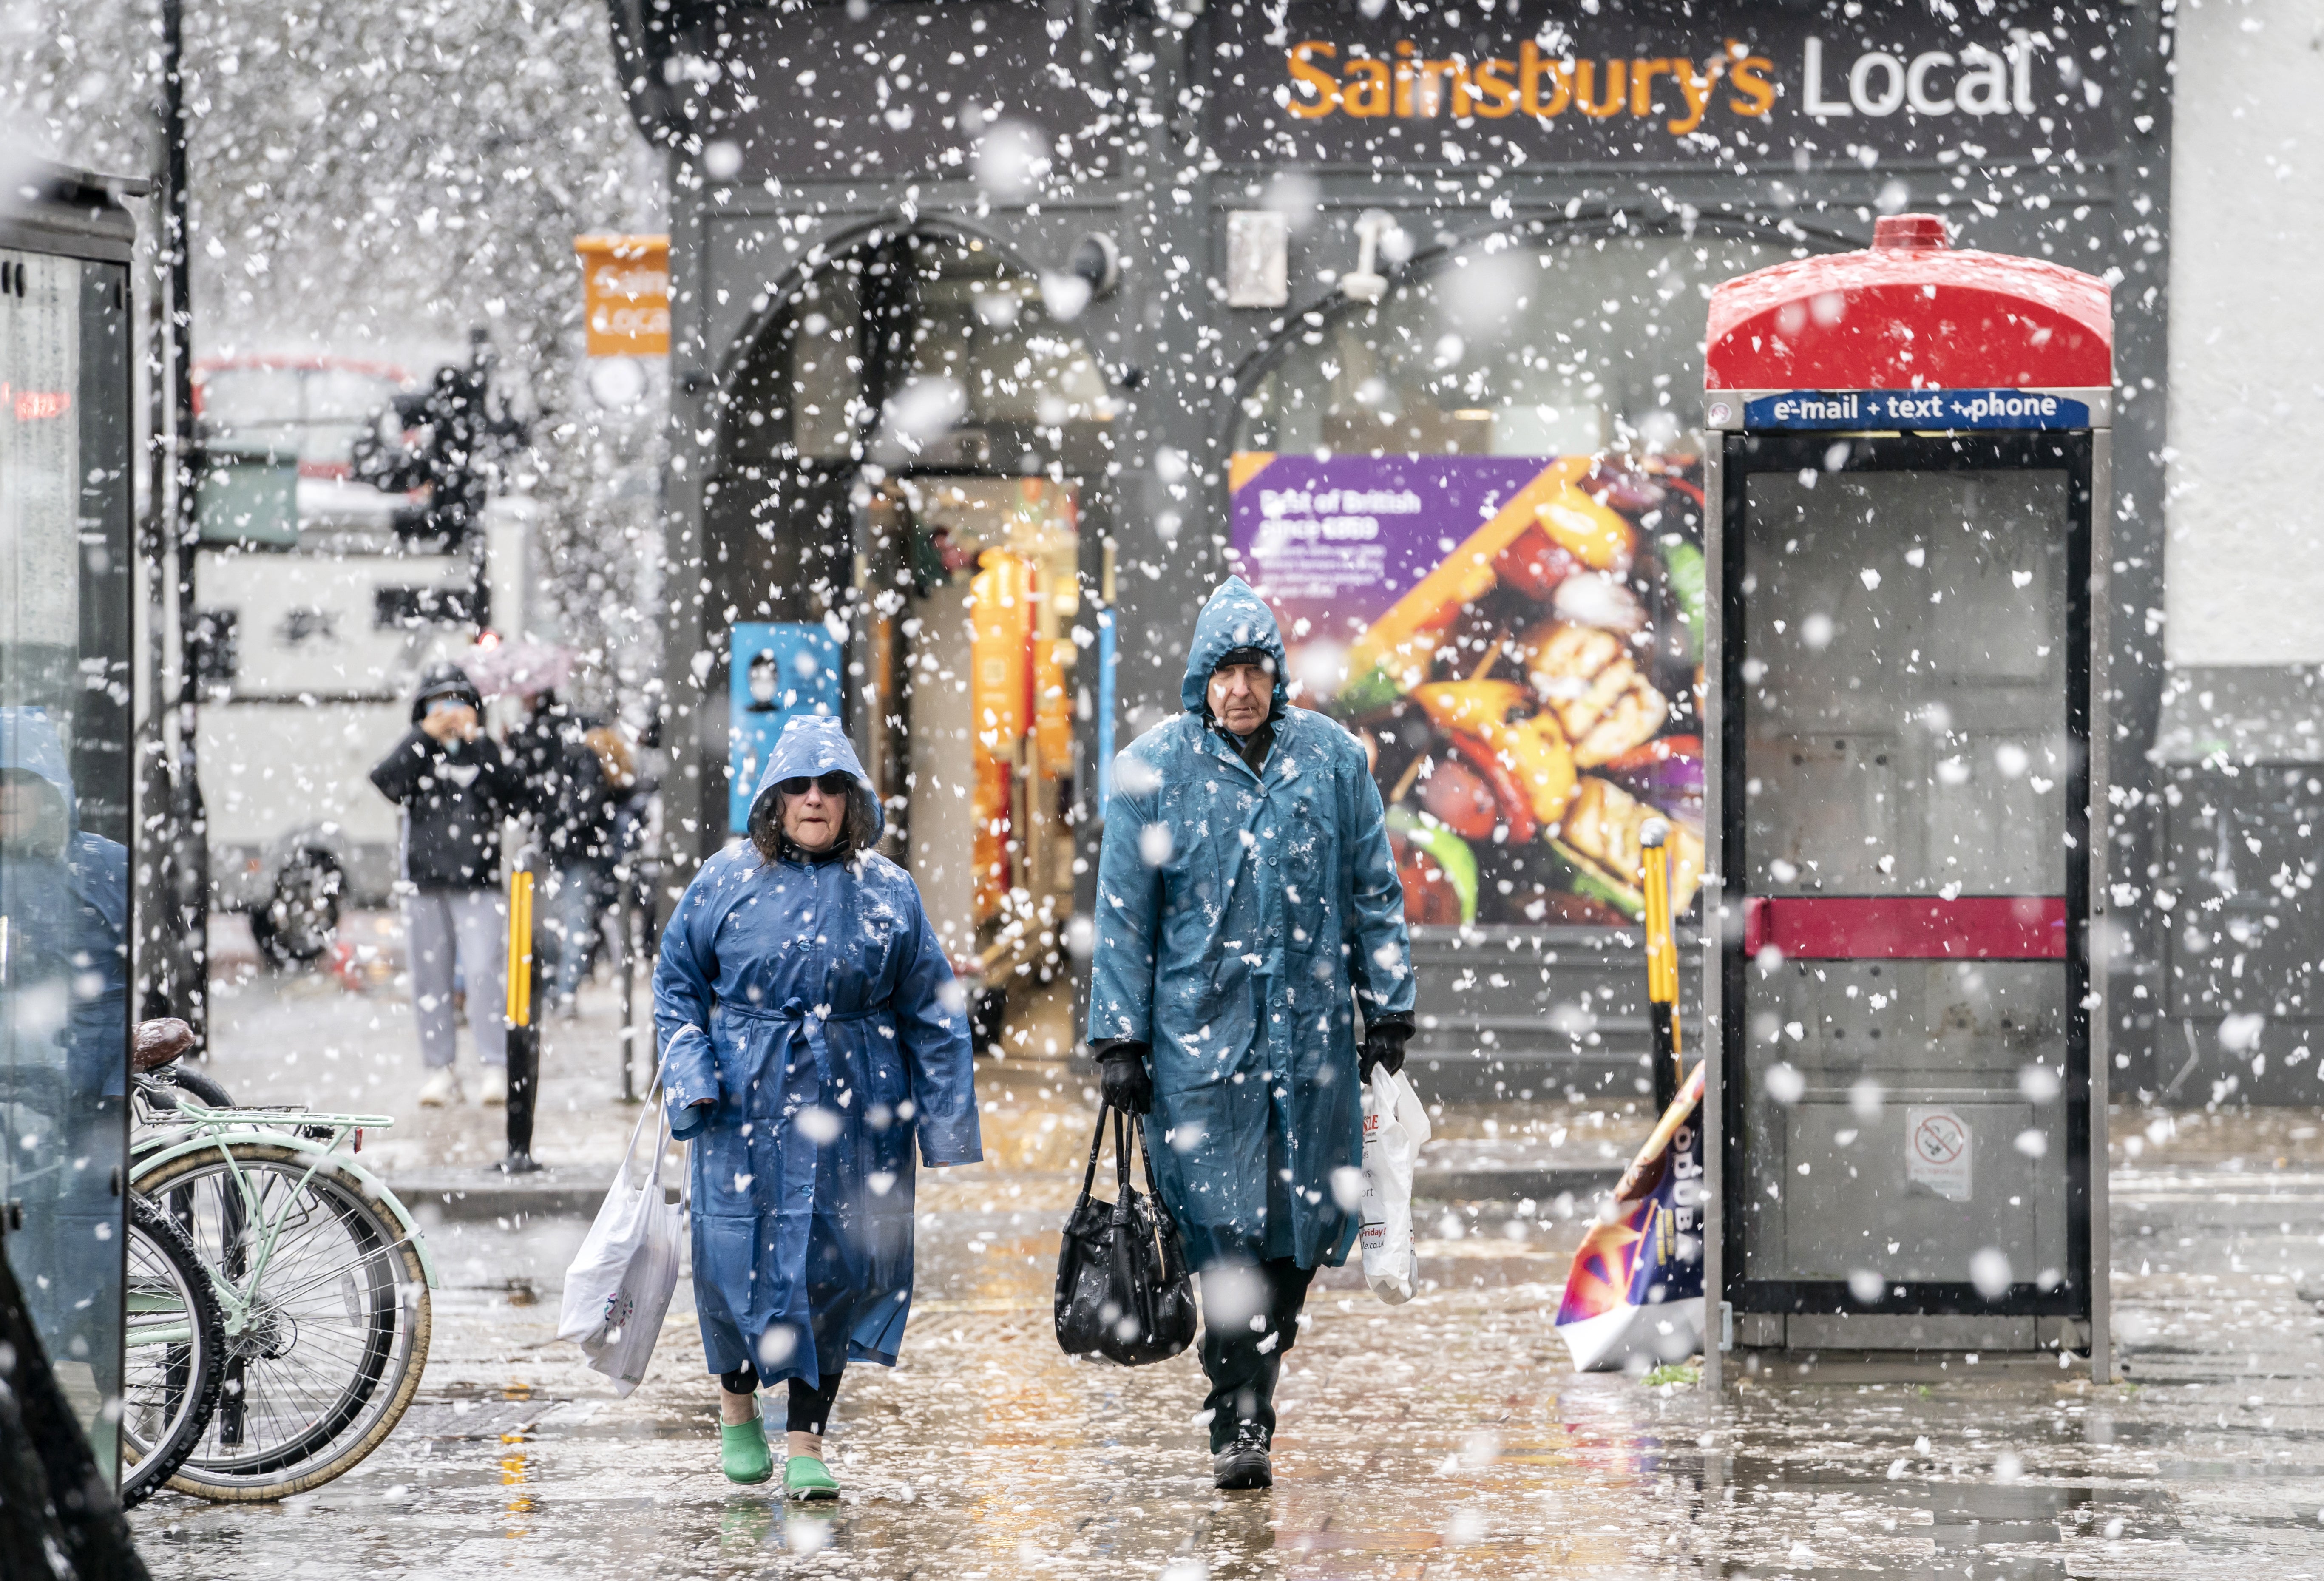 Pedestrians clad in ponchos brave heavy snow in York (Danny Lawson/PA)